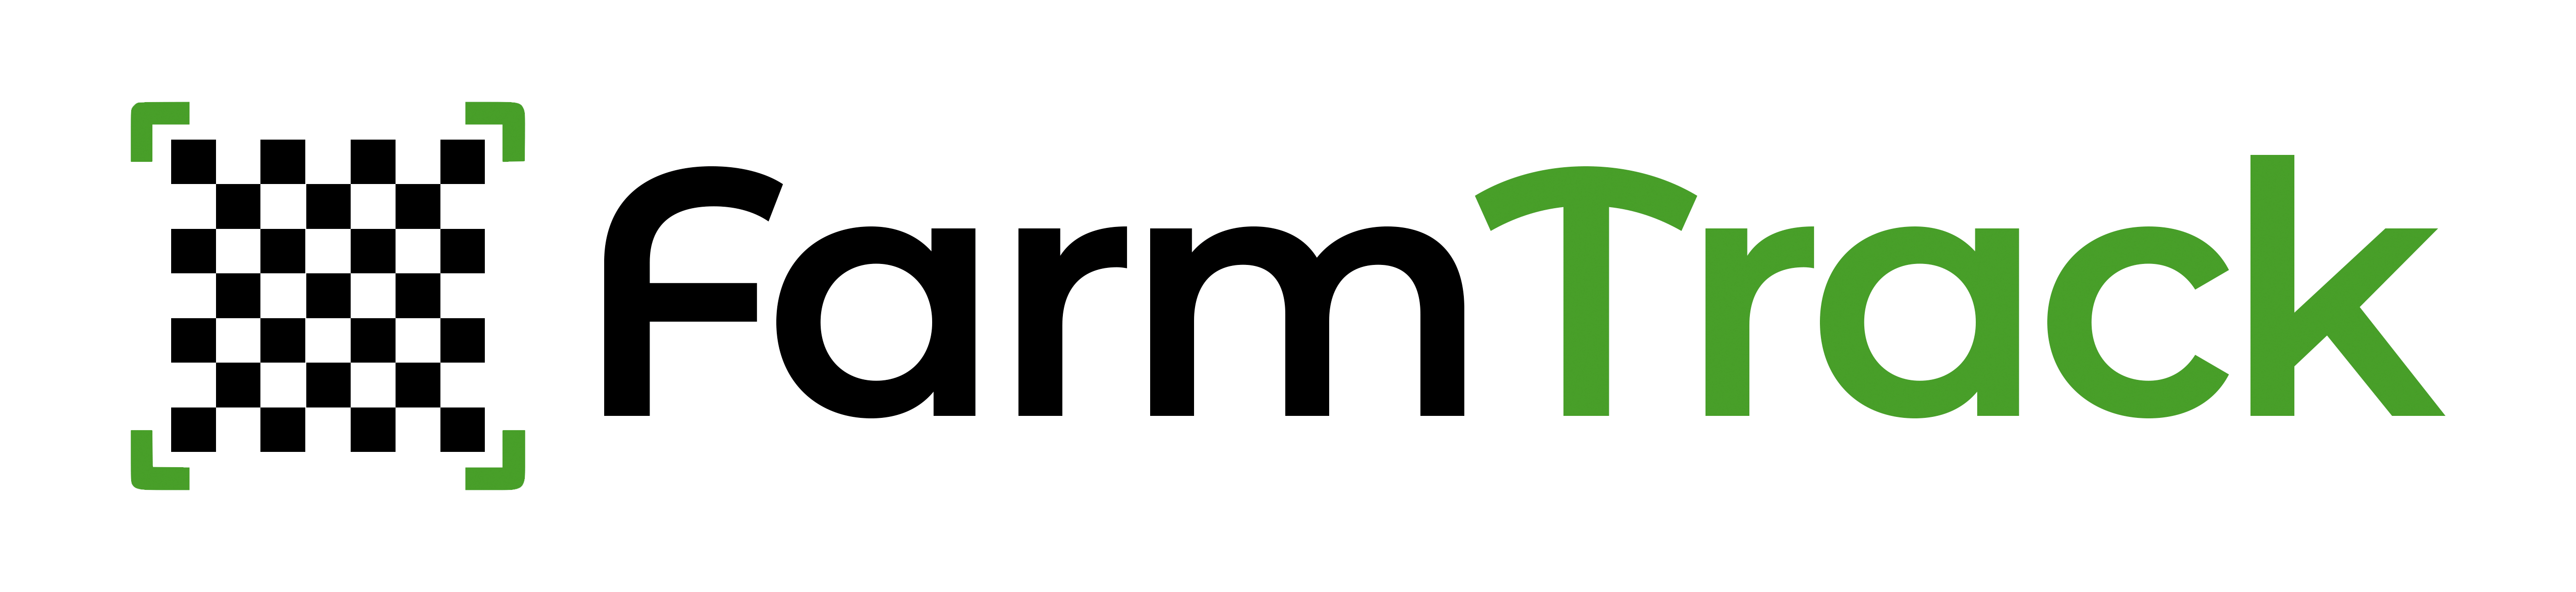 farmtrack-logo